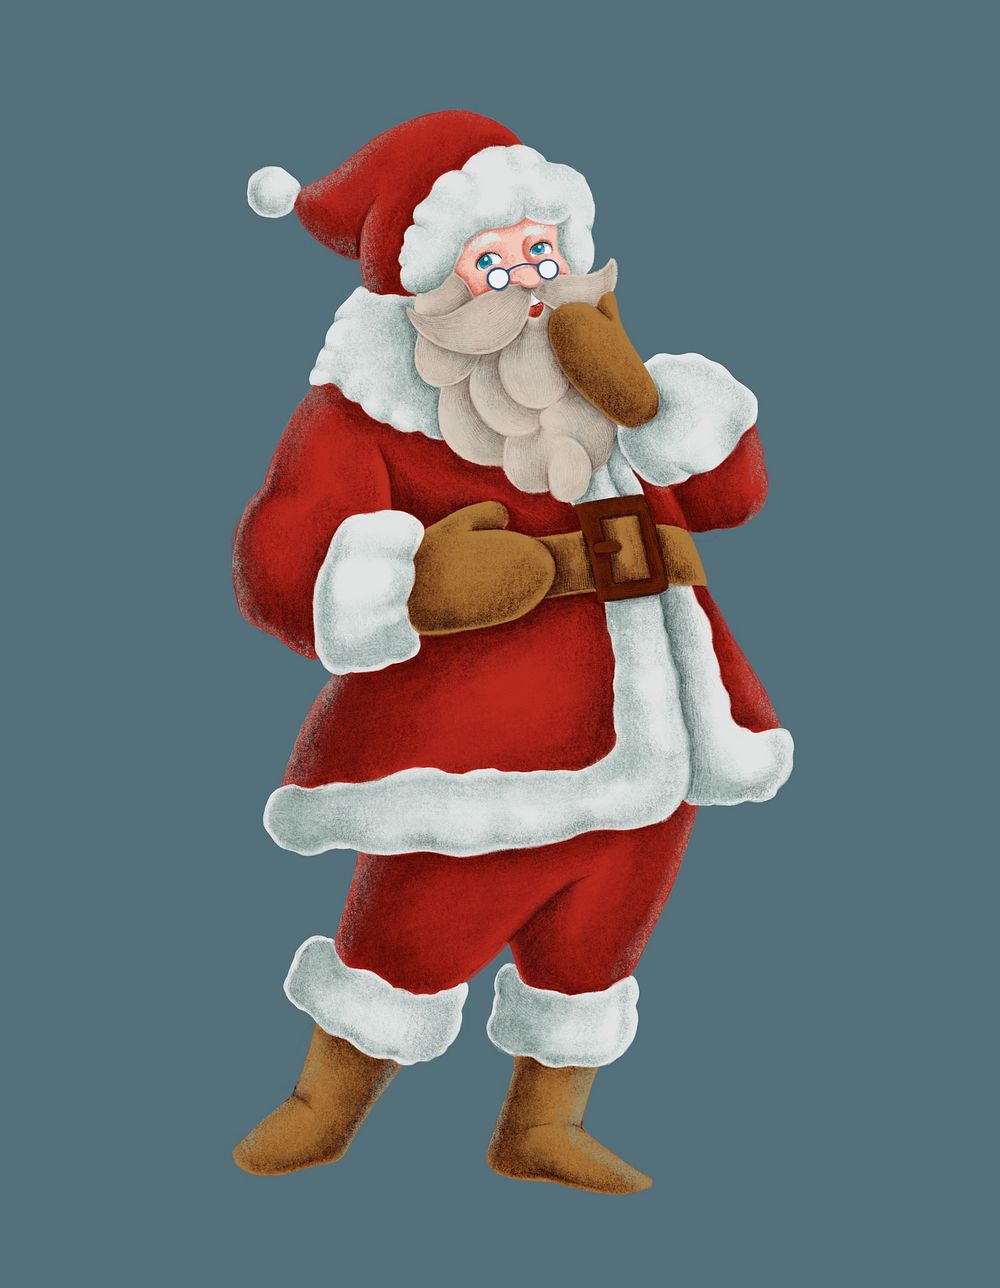 Hand drawn Santa Claus illustration